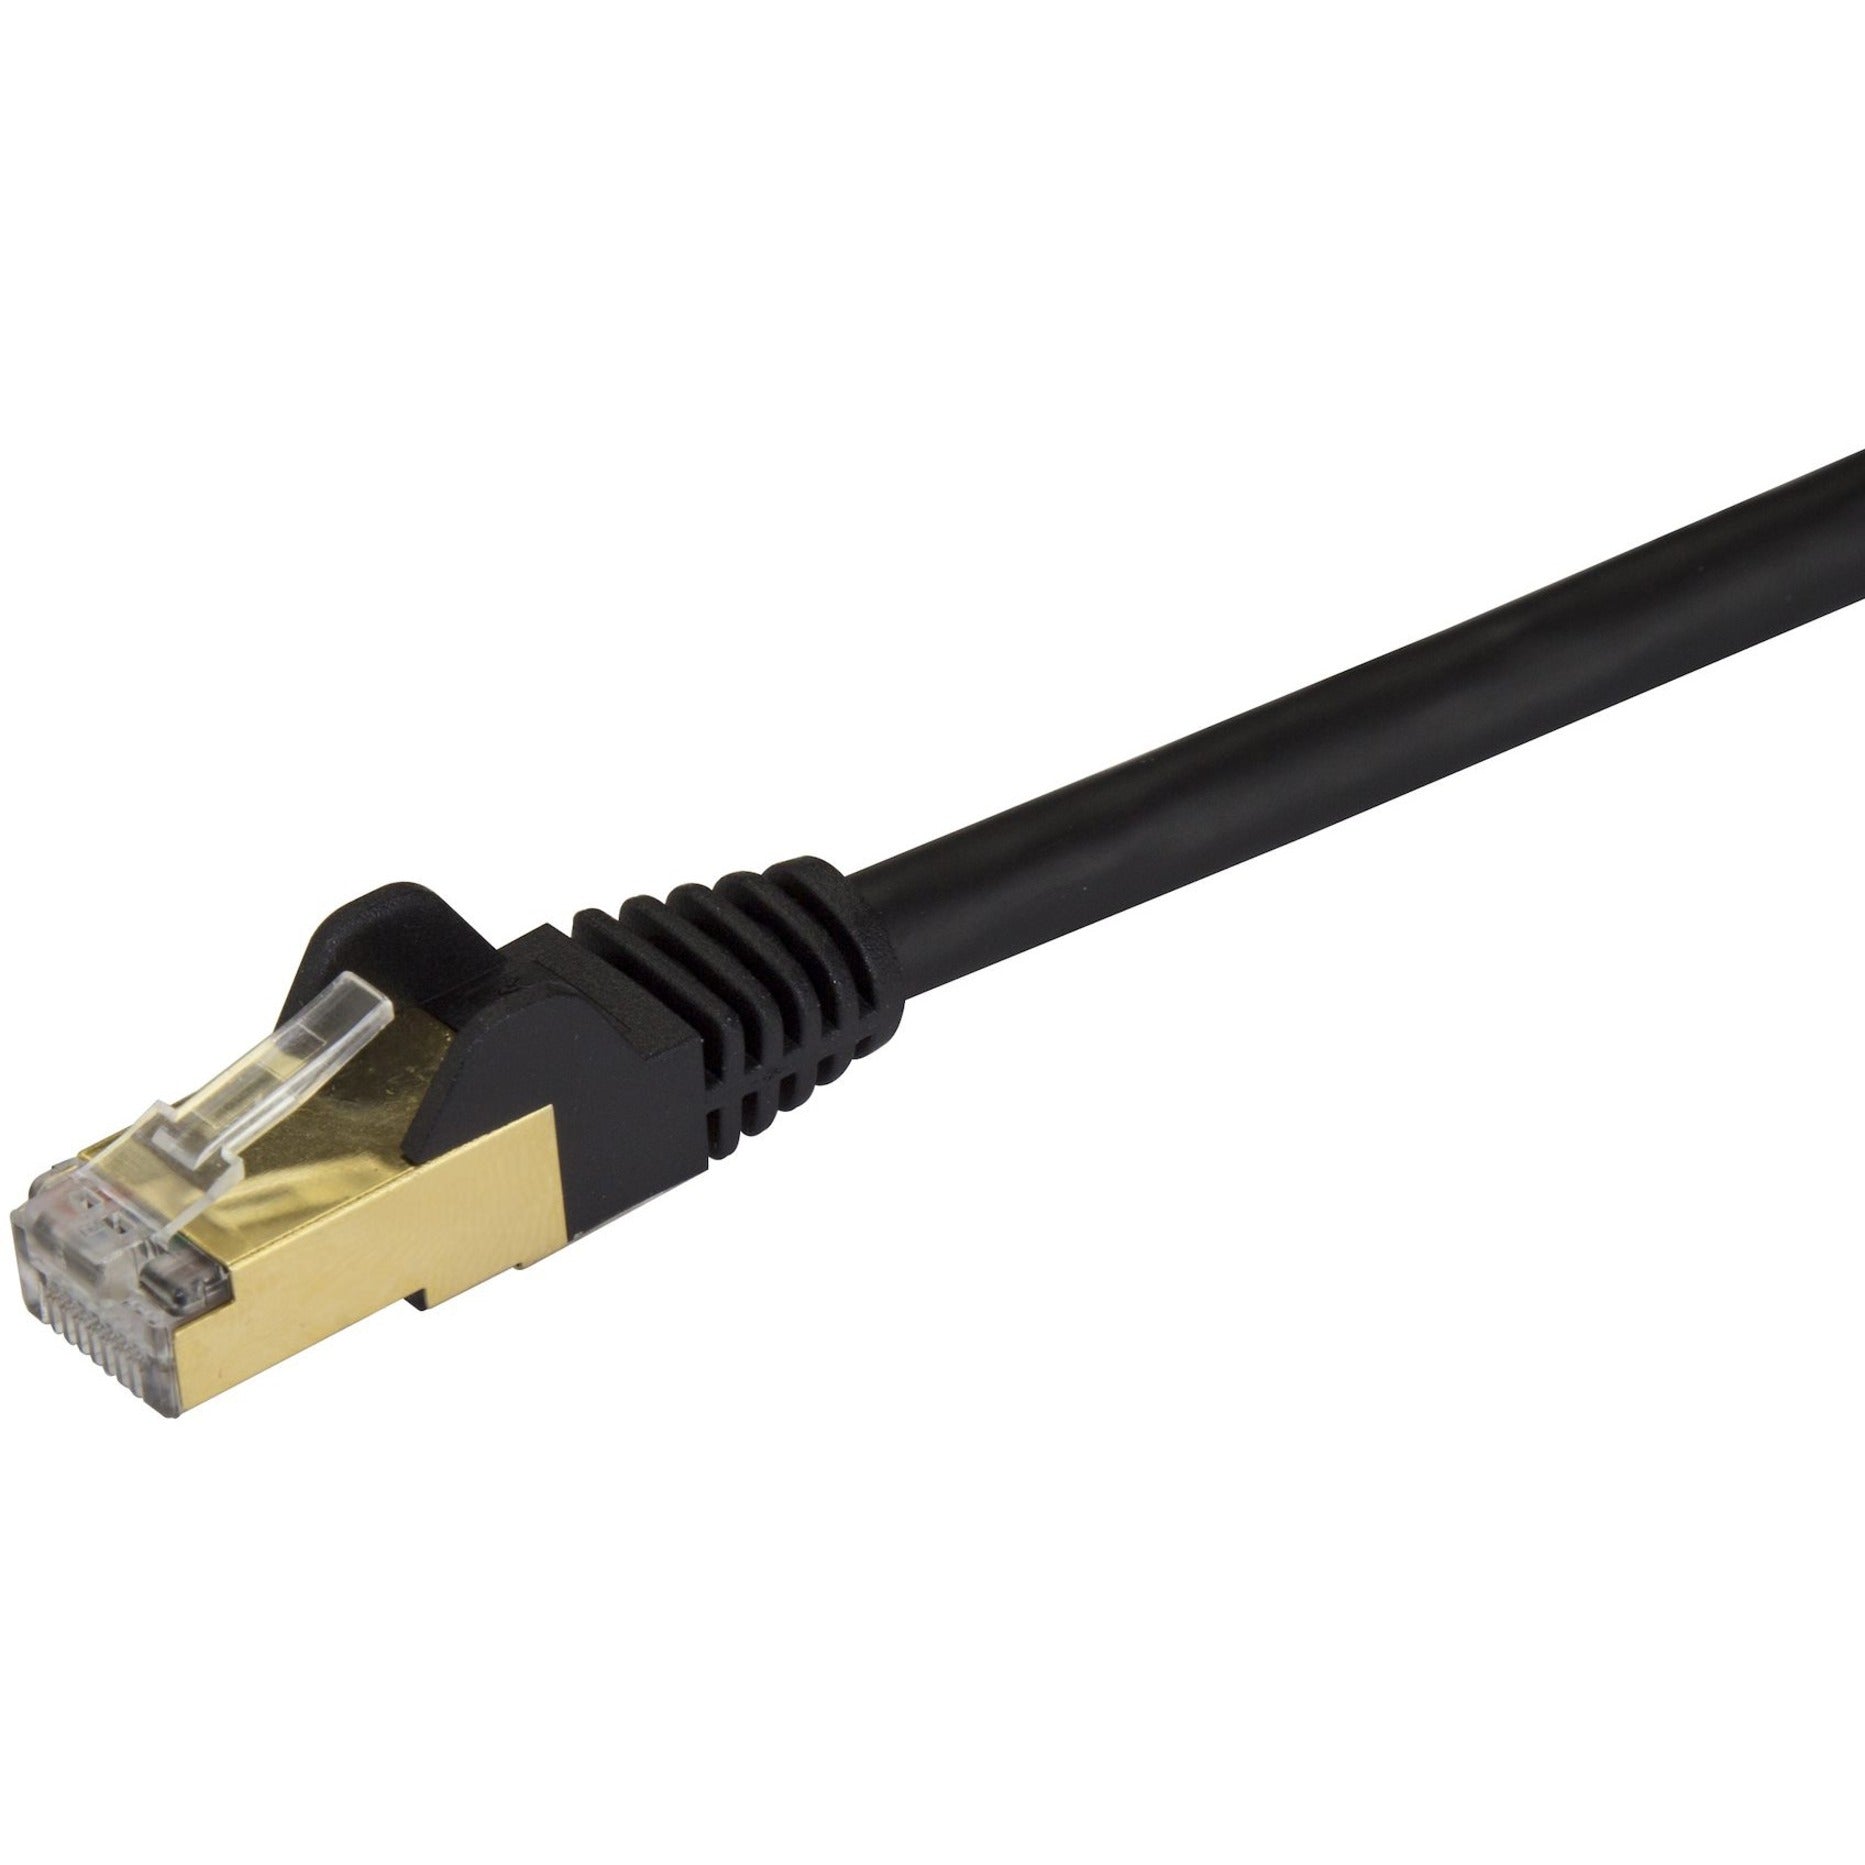 StarTech.com C6ASPAT4BK Cat6a Ethernet Patch Cable - Shielded (STP) - 4 ft., Black, Snagless RJ45 Ethernet Cord